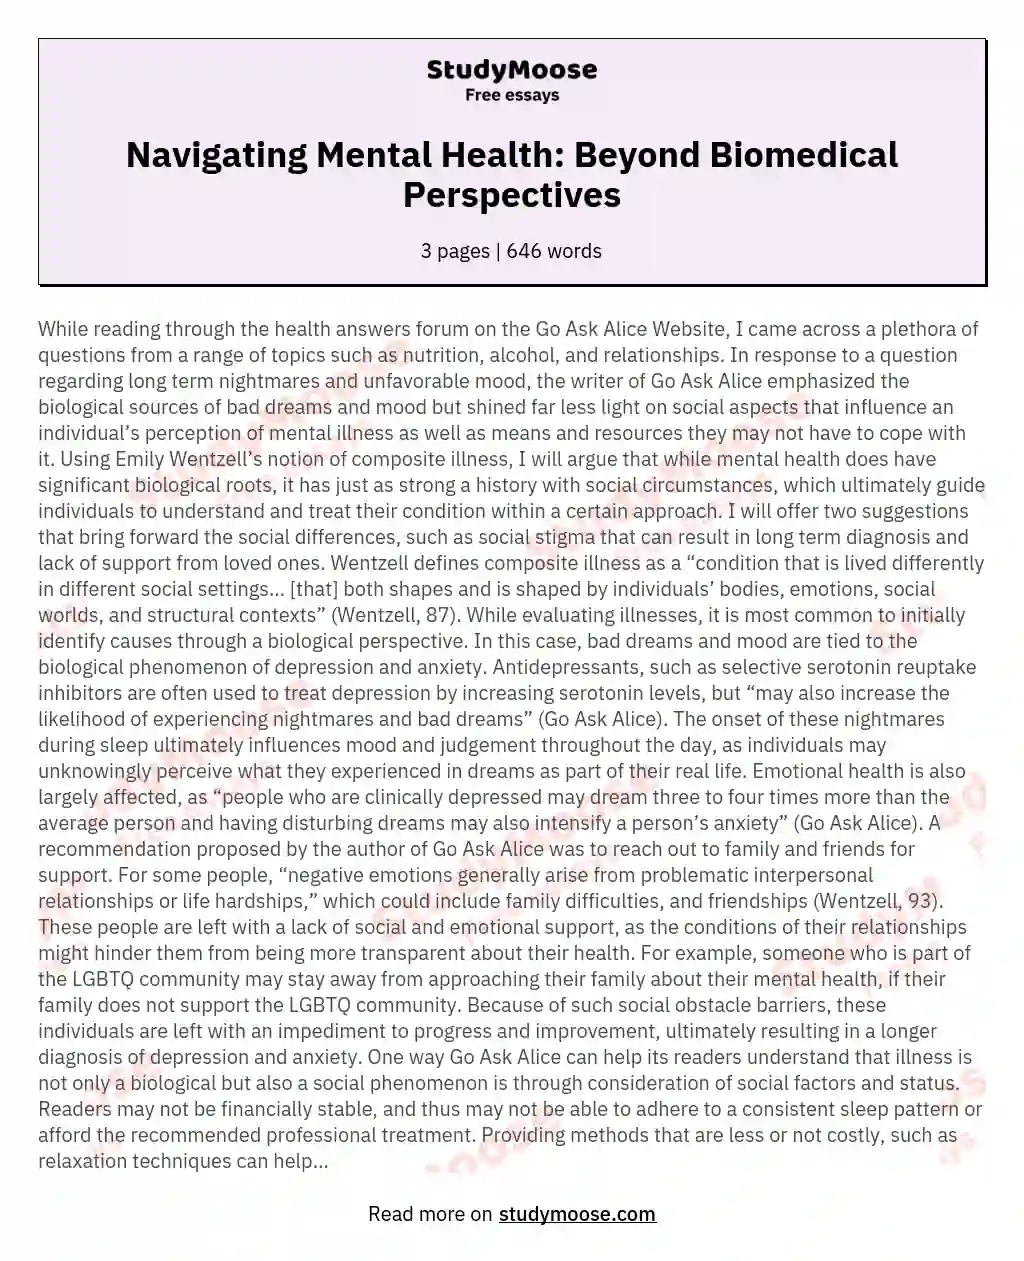 Navigating Mental Health: Beyond Biomedical Perspectives essay